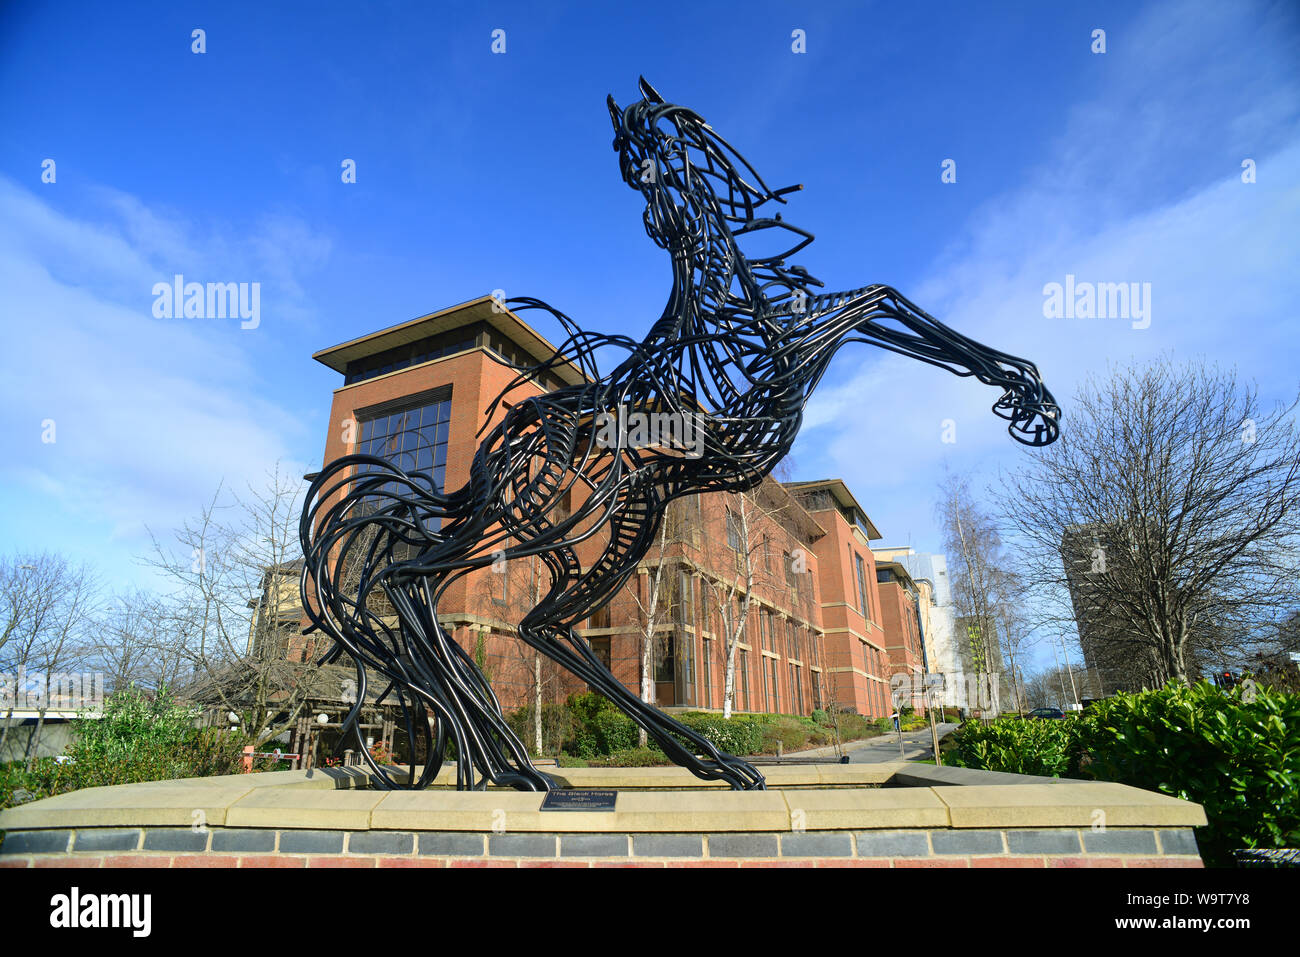 black horse statue 'Cancara' created by peter tysoe outside Lloyds bank headquarters Lovell Park Leeds united kingdom Stock Photo